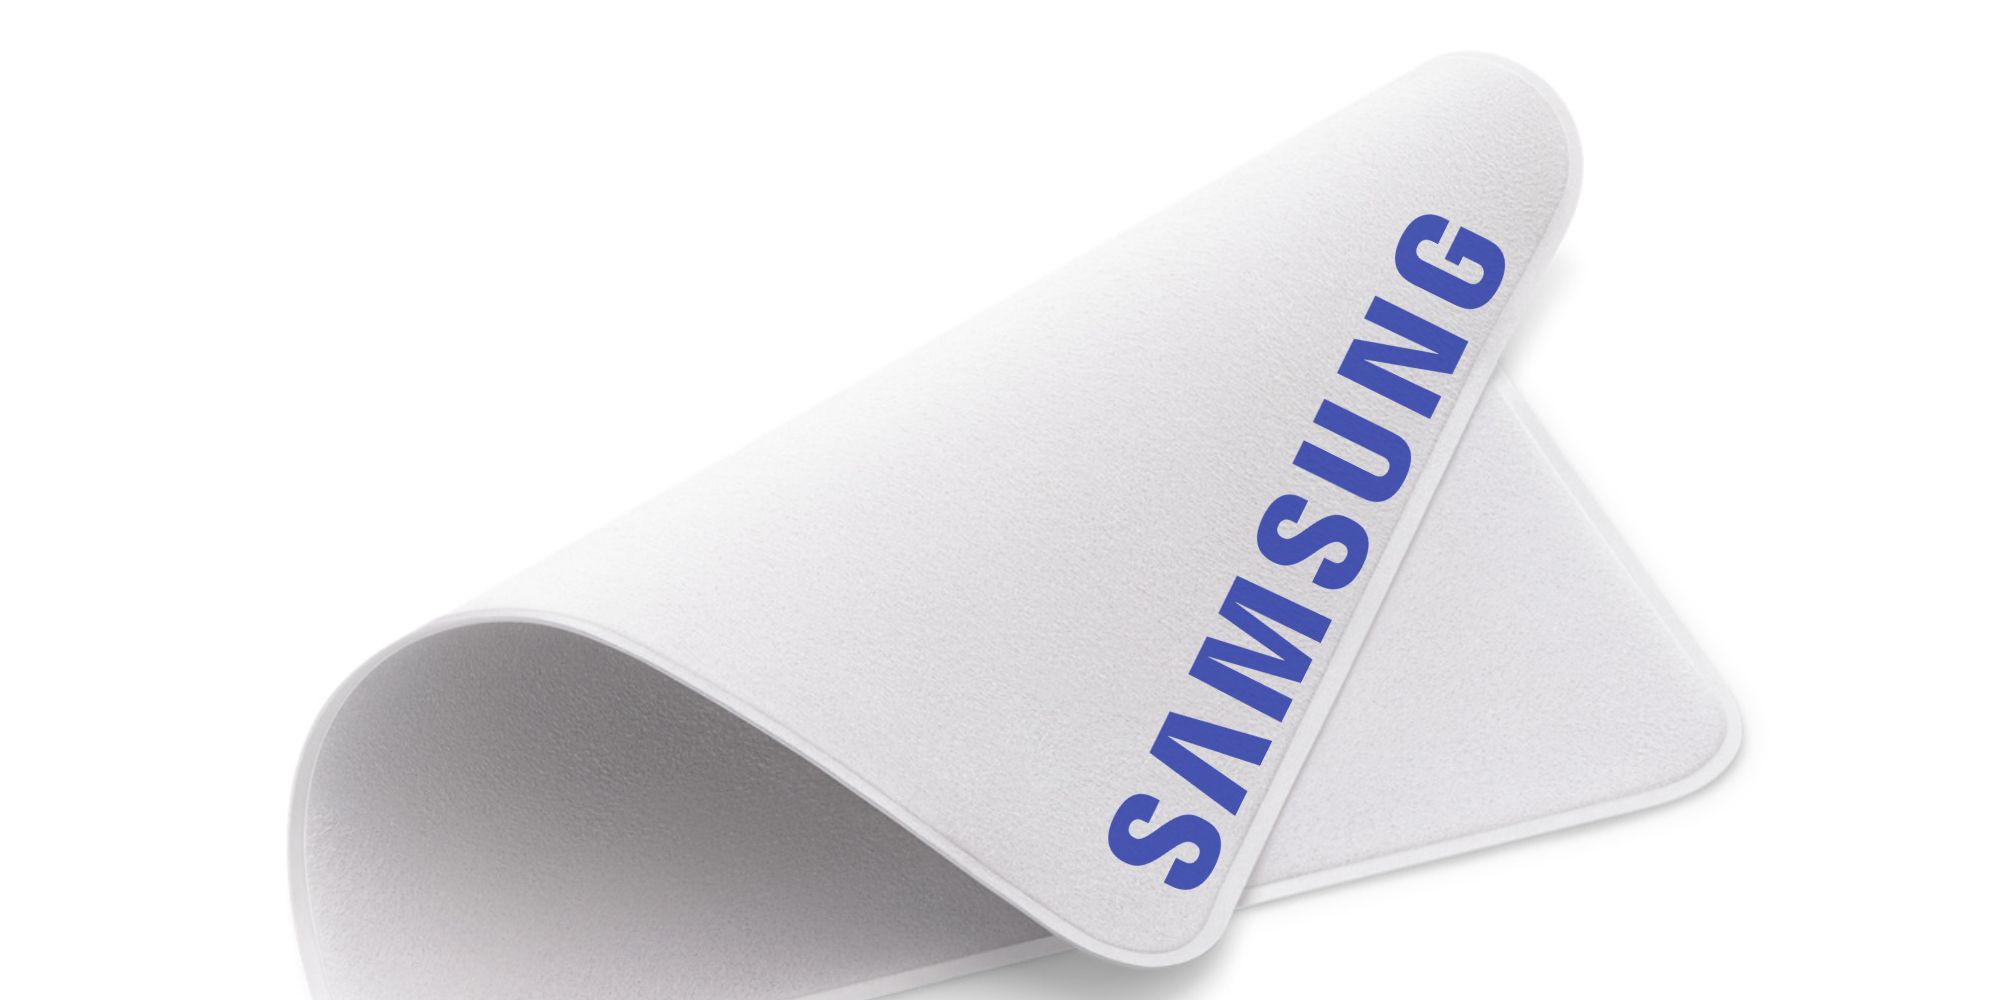 Samsung Mocks Apples $19 Polishing Cloth By Giving Them Away For Free